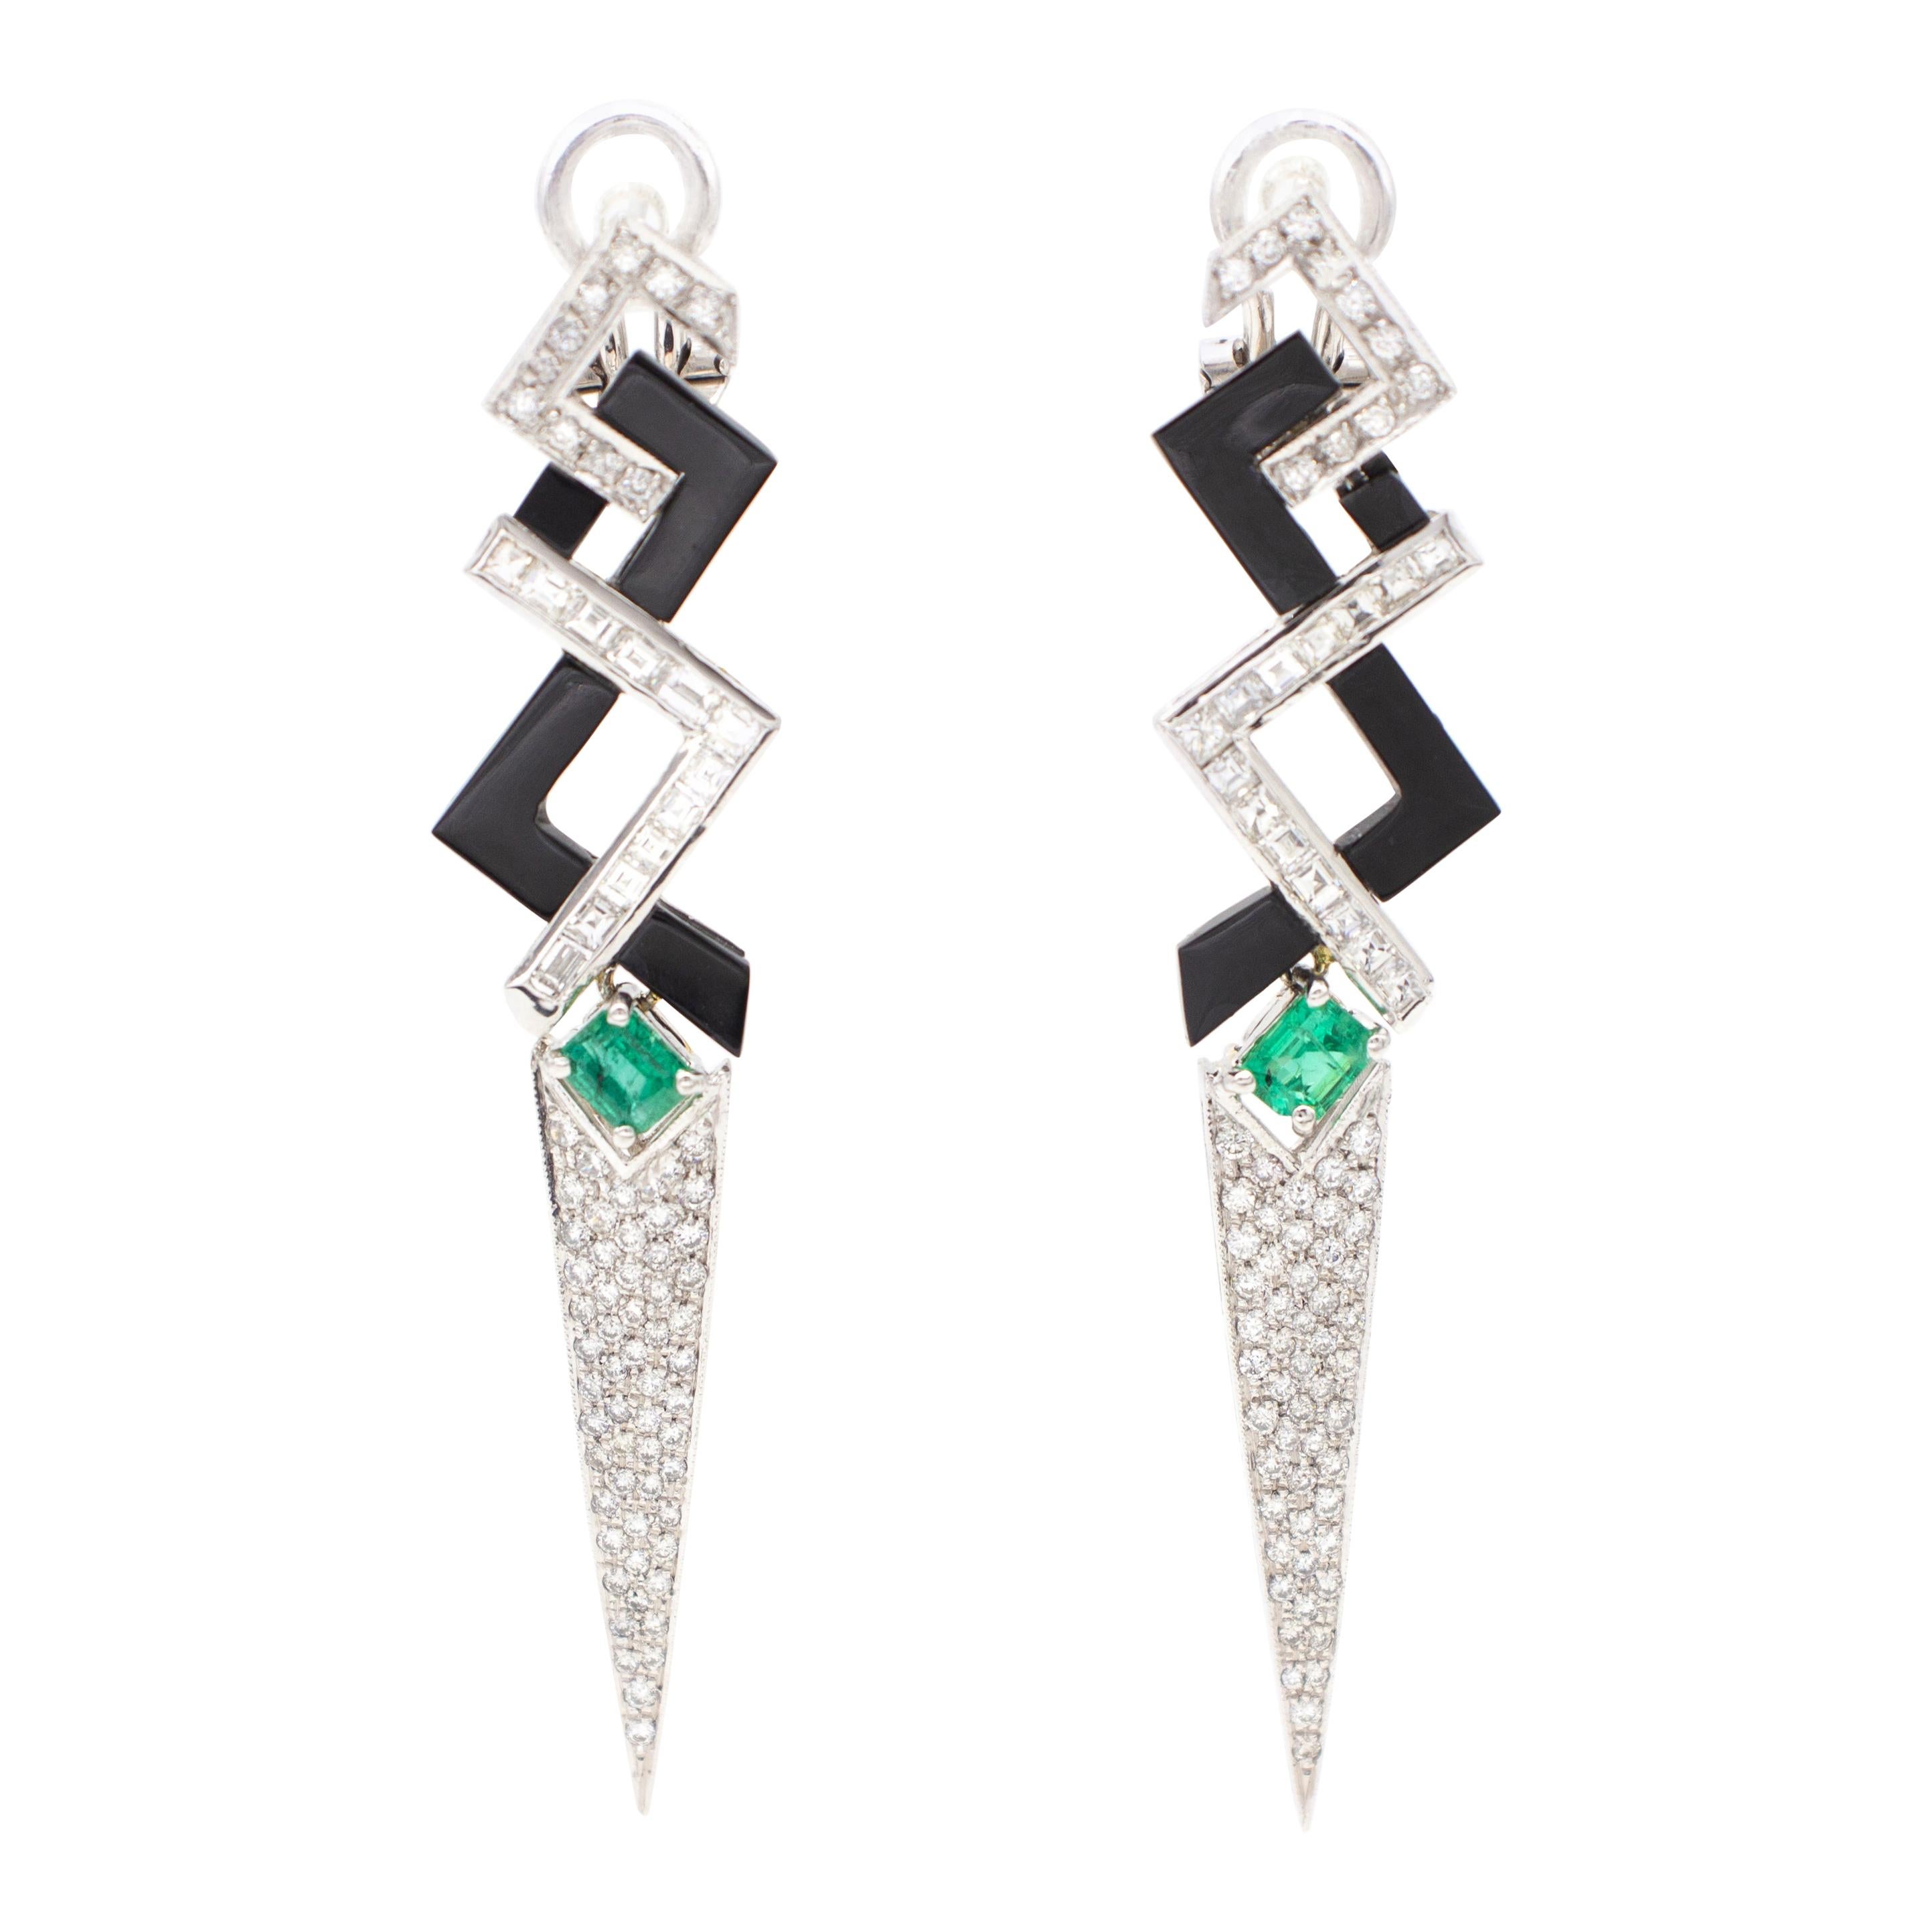 Platinum Diamonds Fancy Cuts, Emeralds, Onyx, Clip-On Fashion Earrings